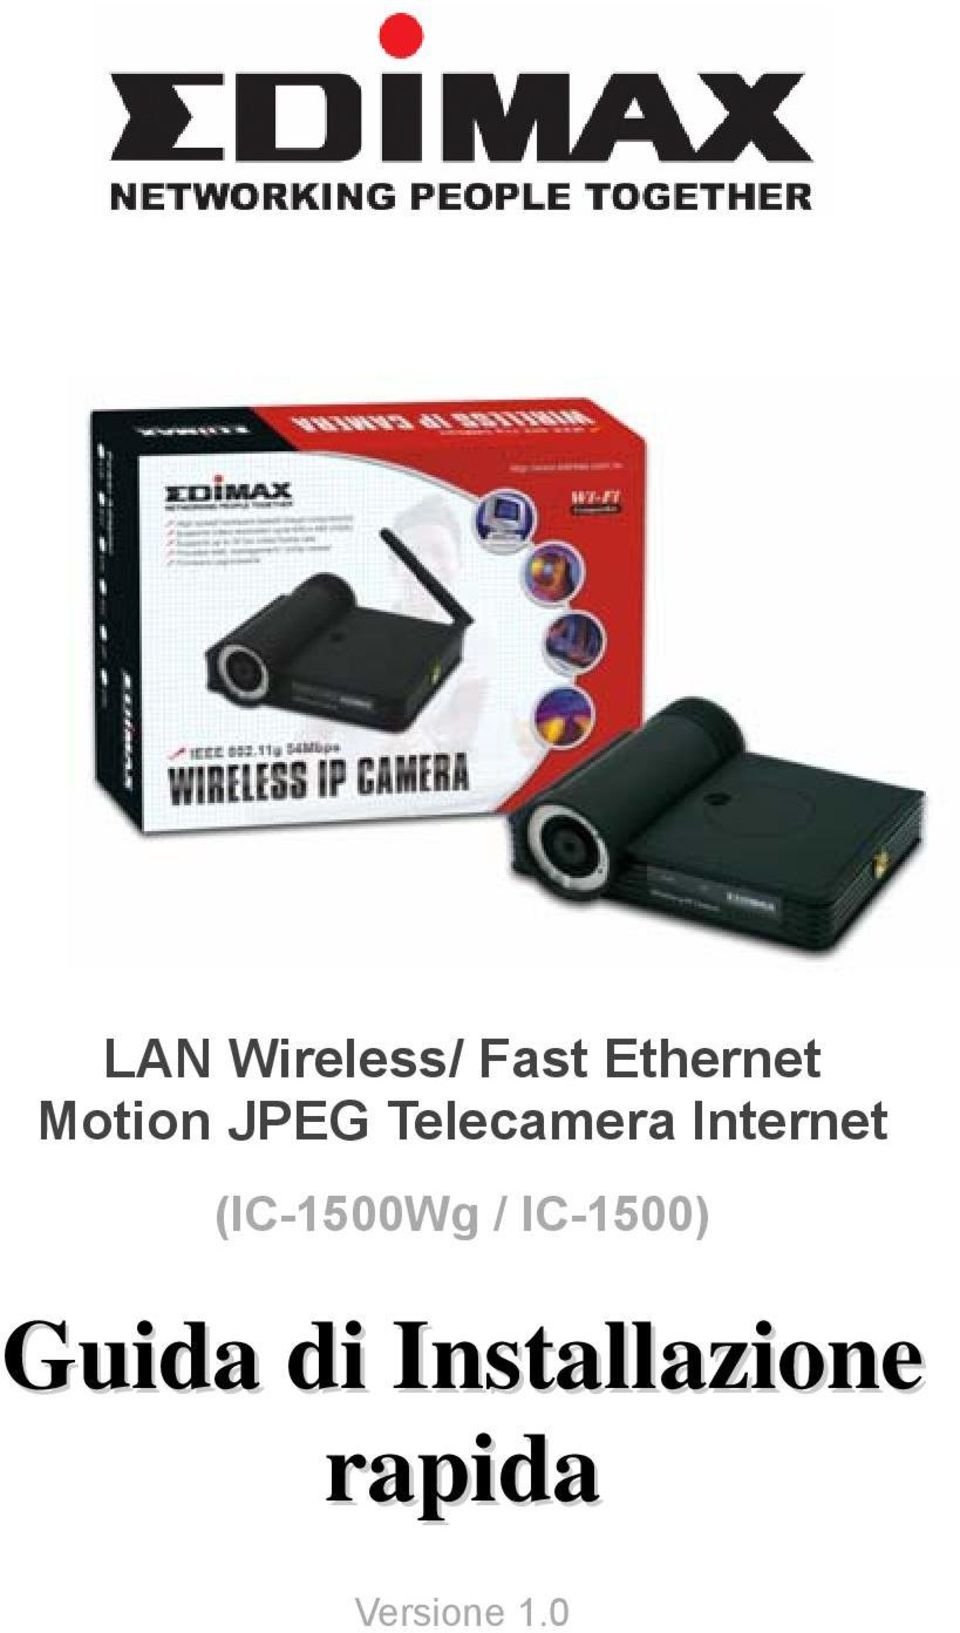 Internet (IC-1500Wg / IC-1500)